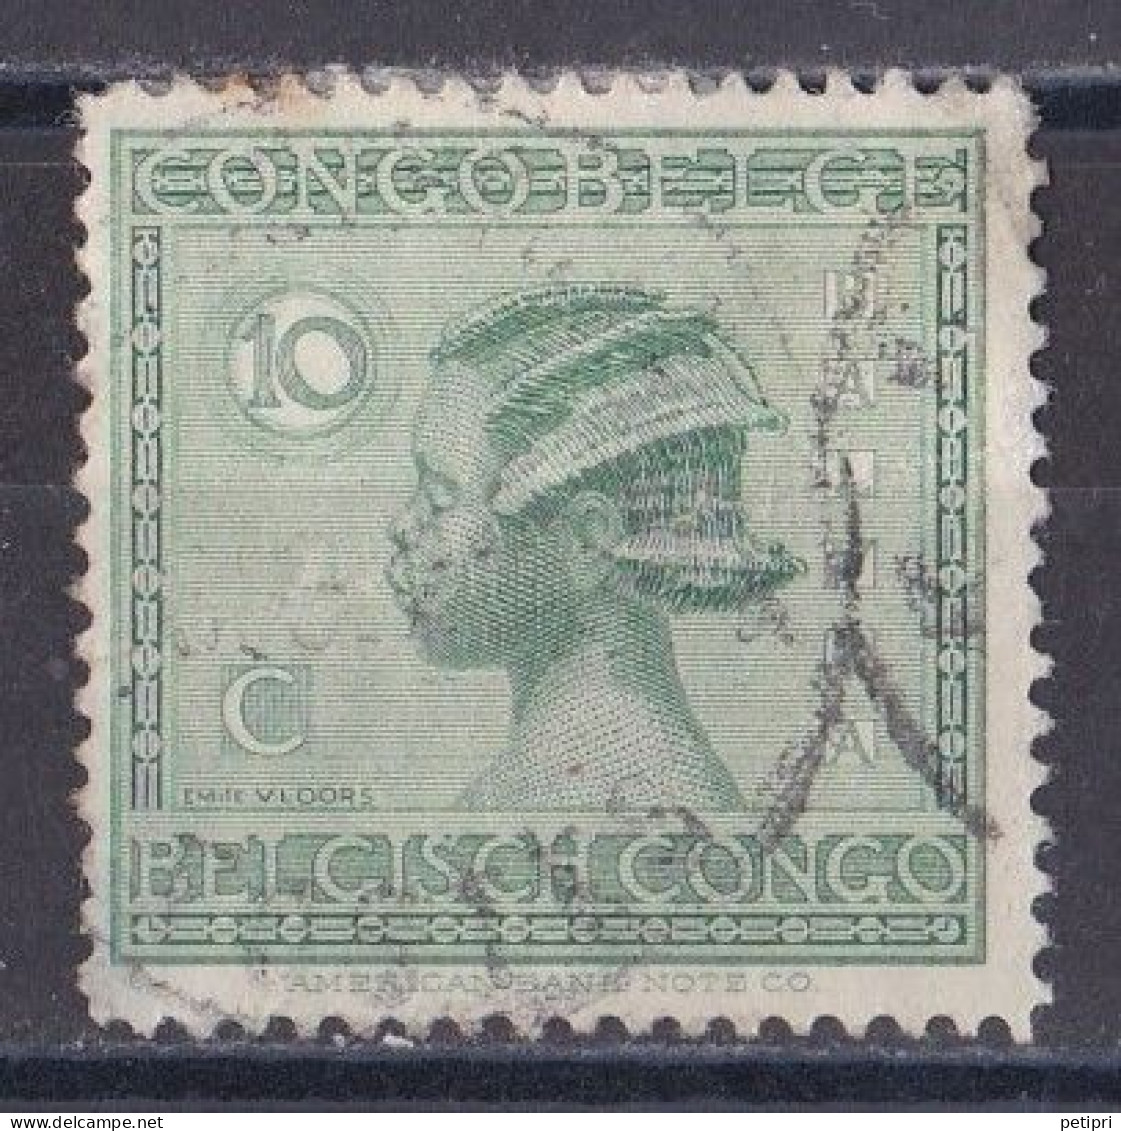 Congo Belge N° 107  Oblitéré - Gebraucht